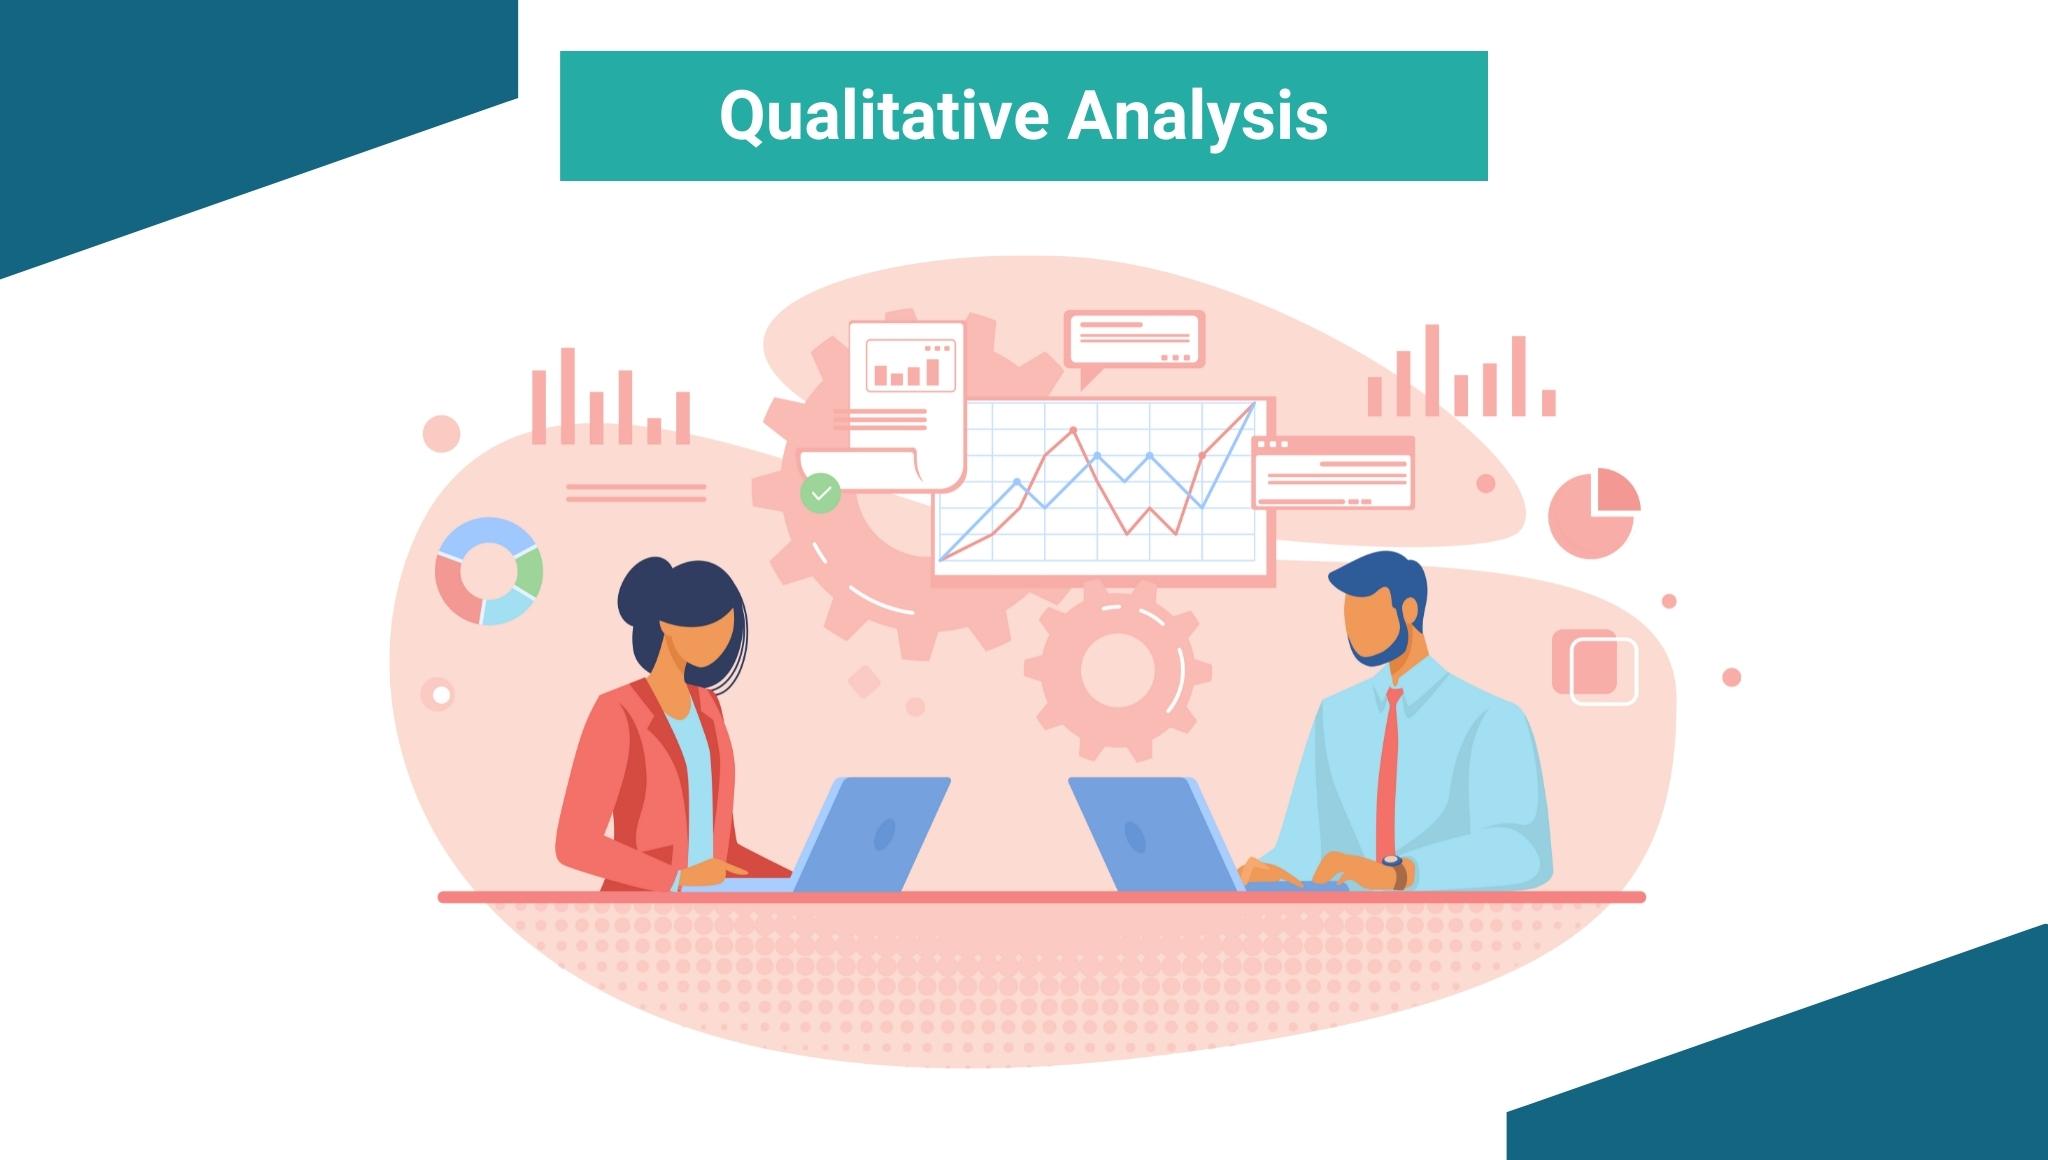 What’s Qualitative Analysis?